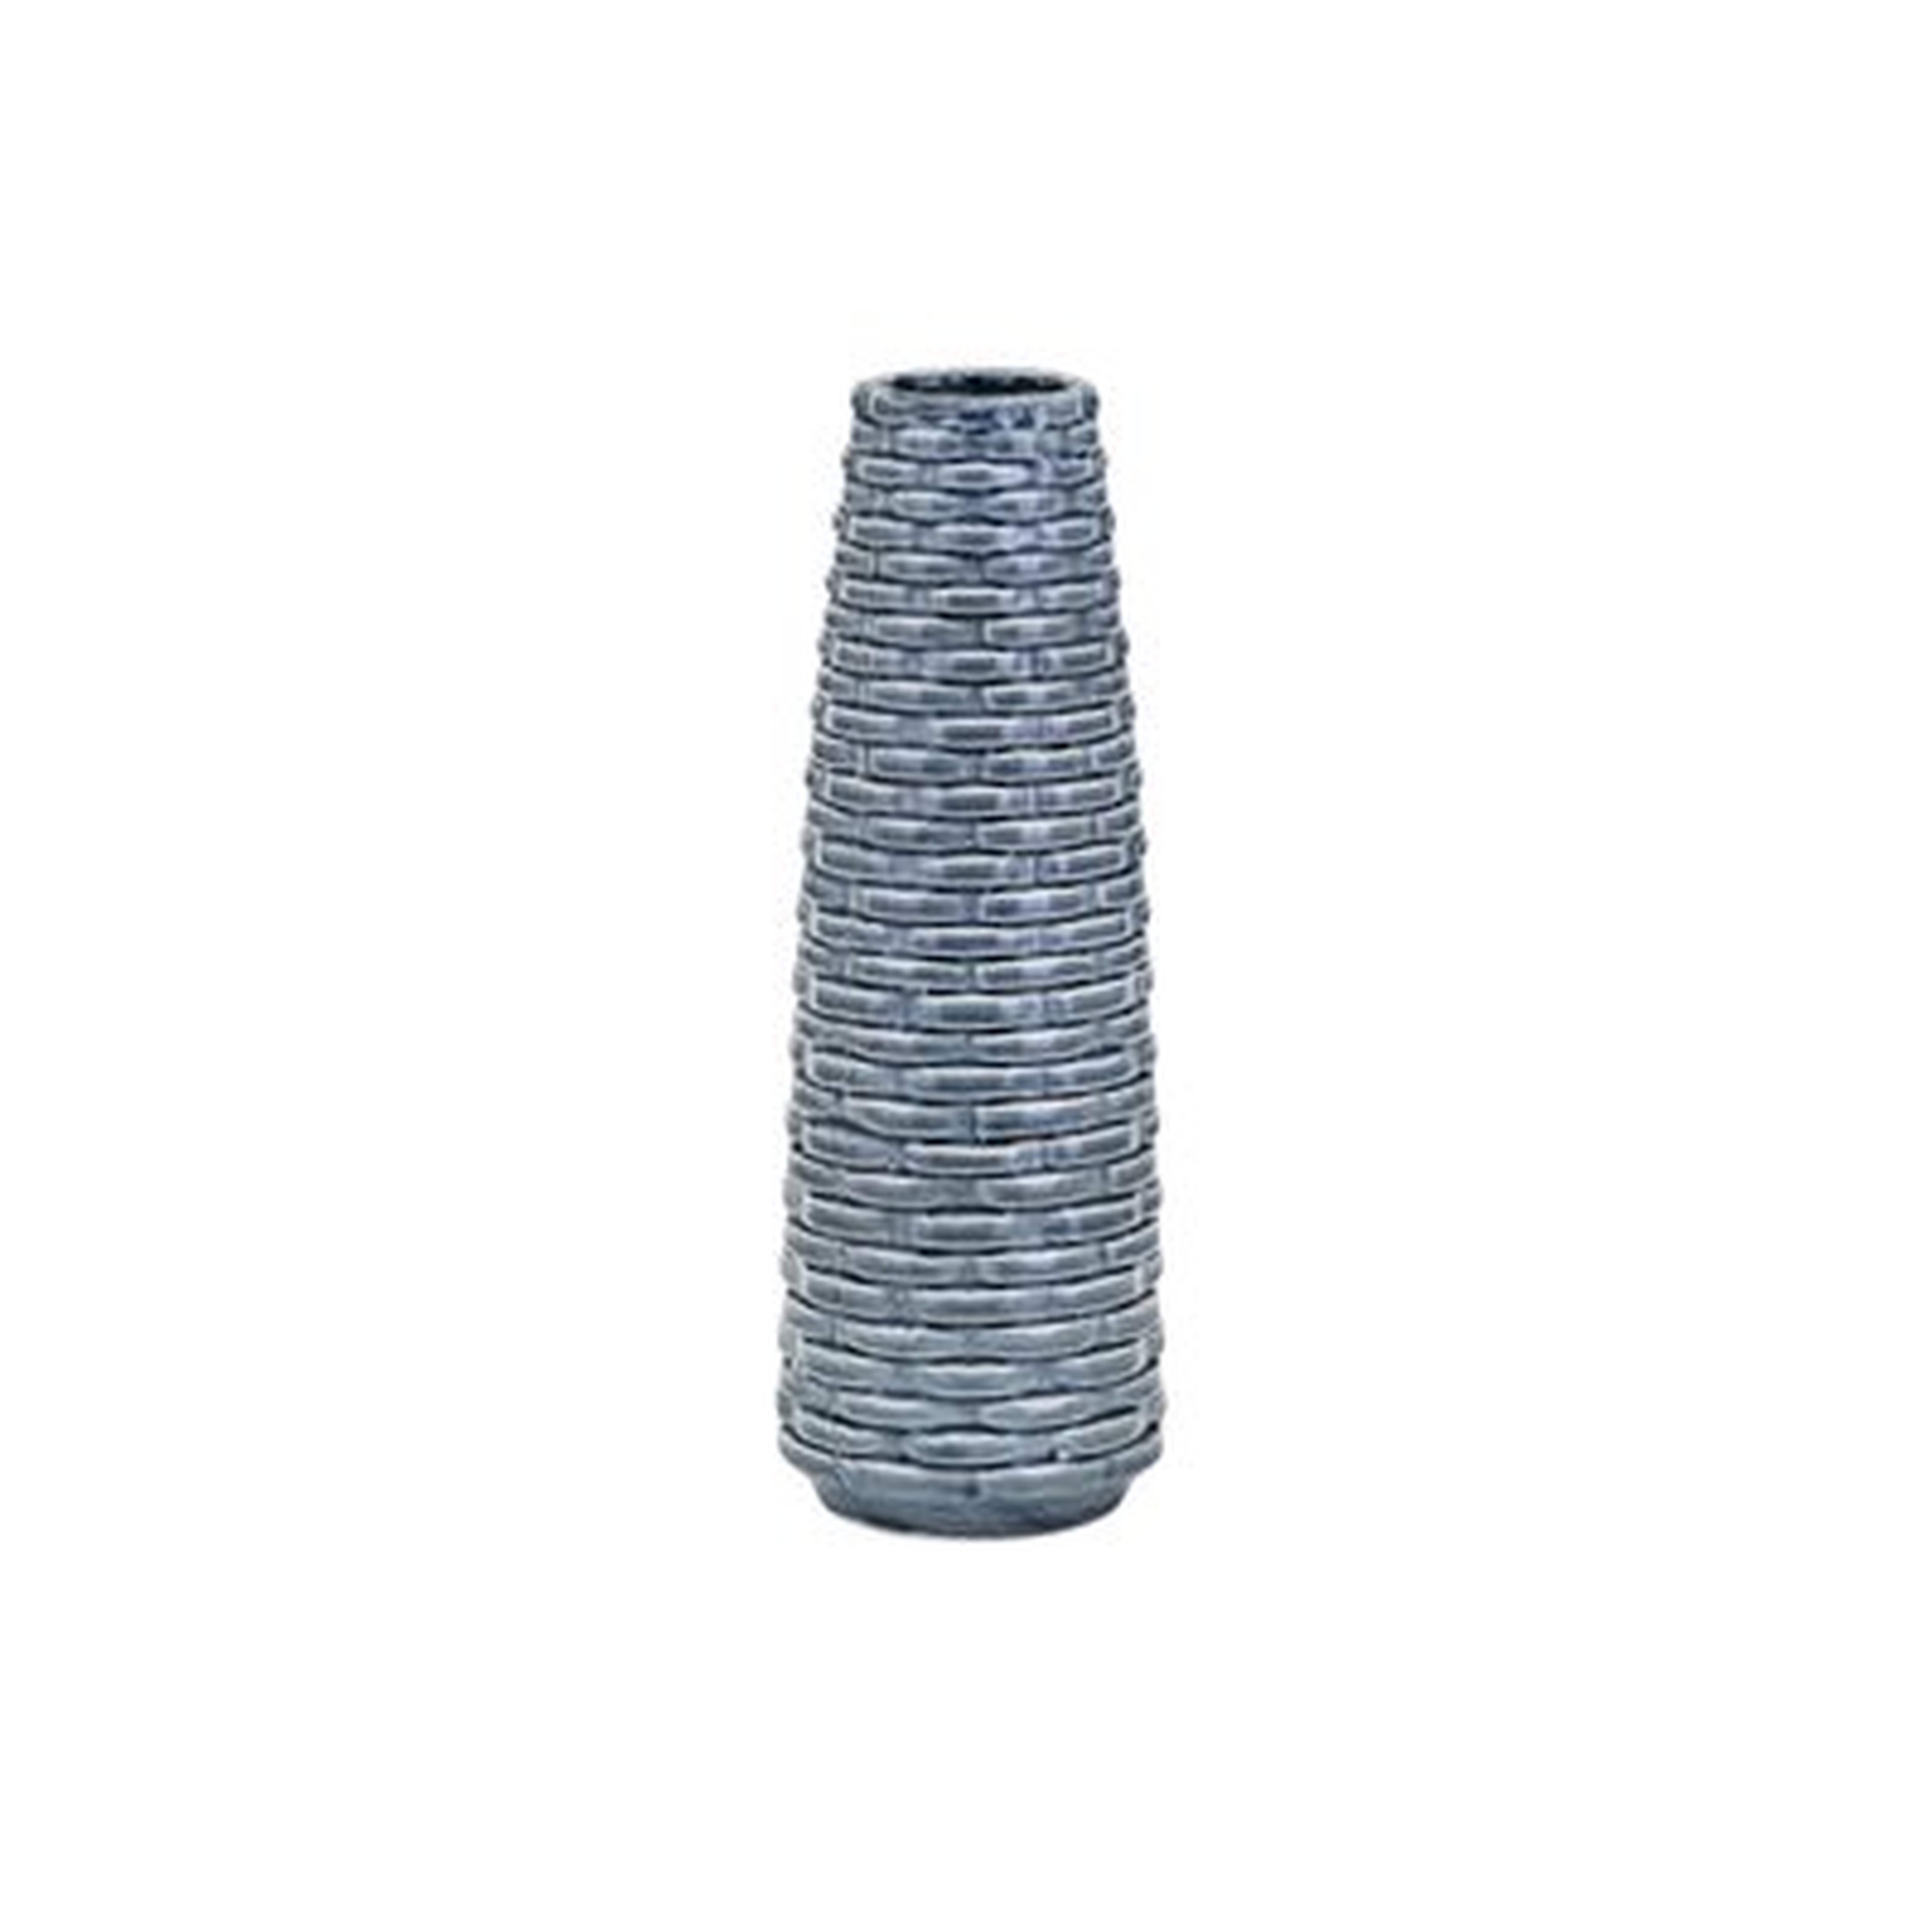 Tilomar Small Table Vase - Wayfair